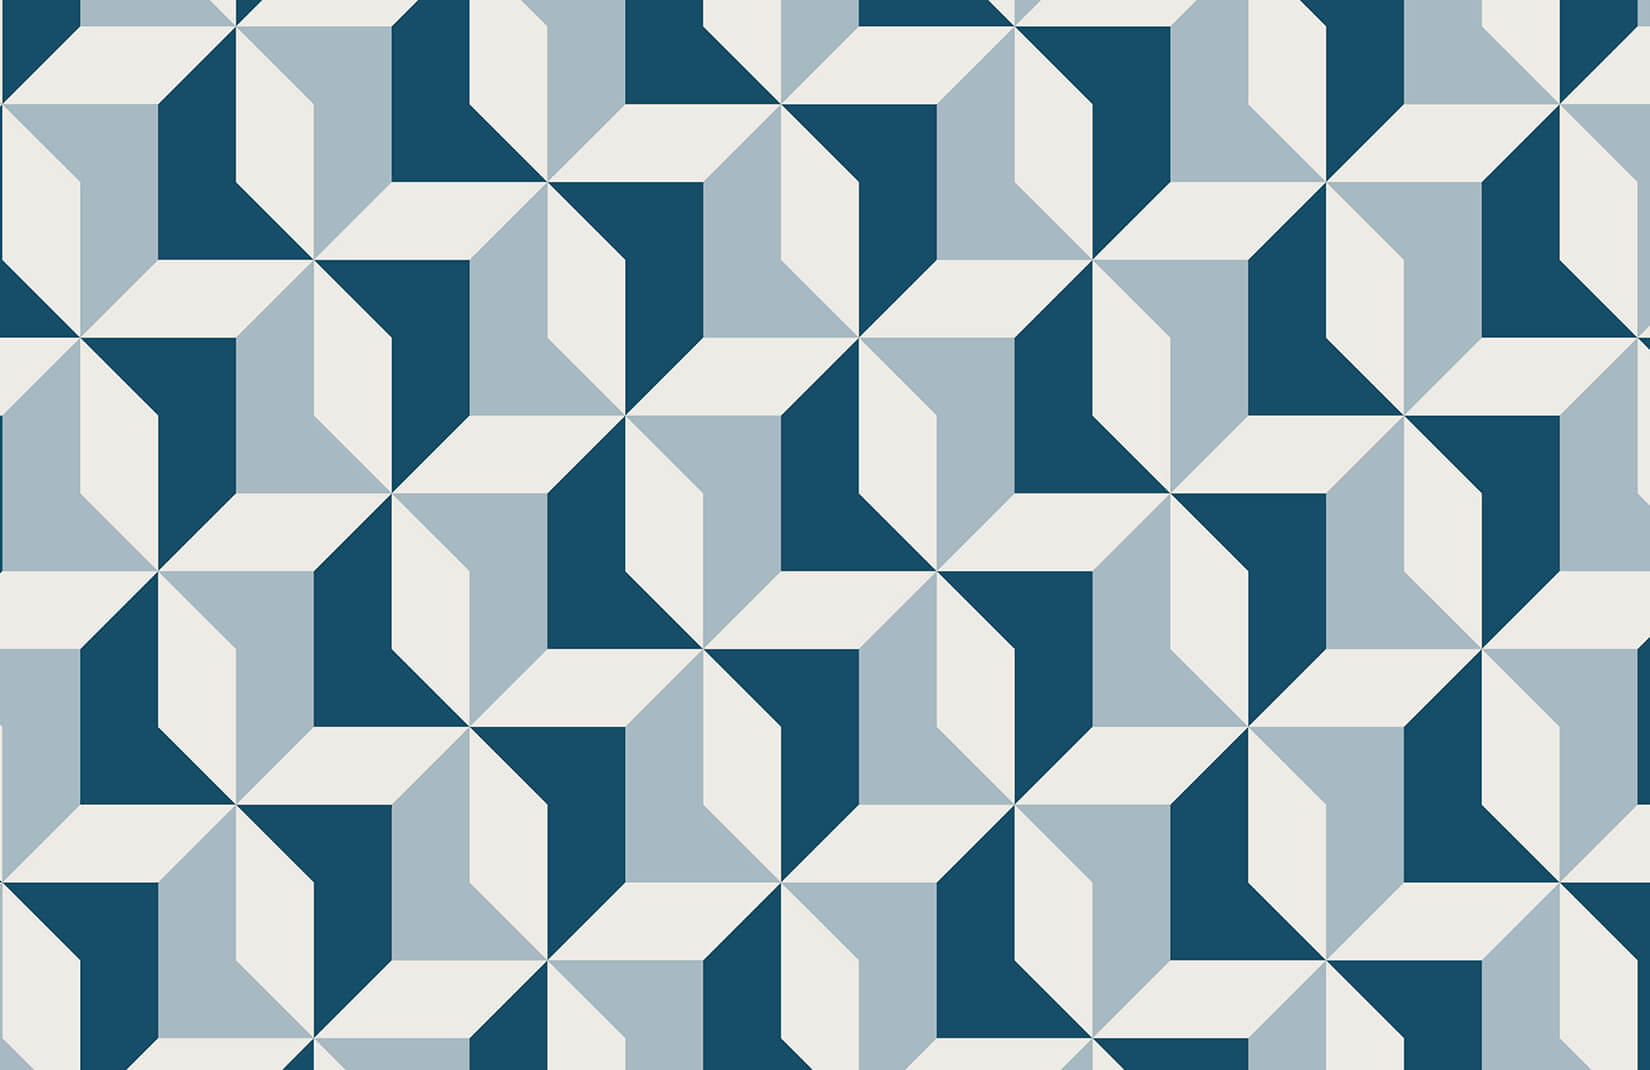 geometrisches design tapete,muster,blau,türkis,blaugrün,aqua